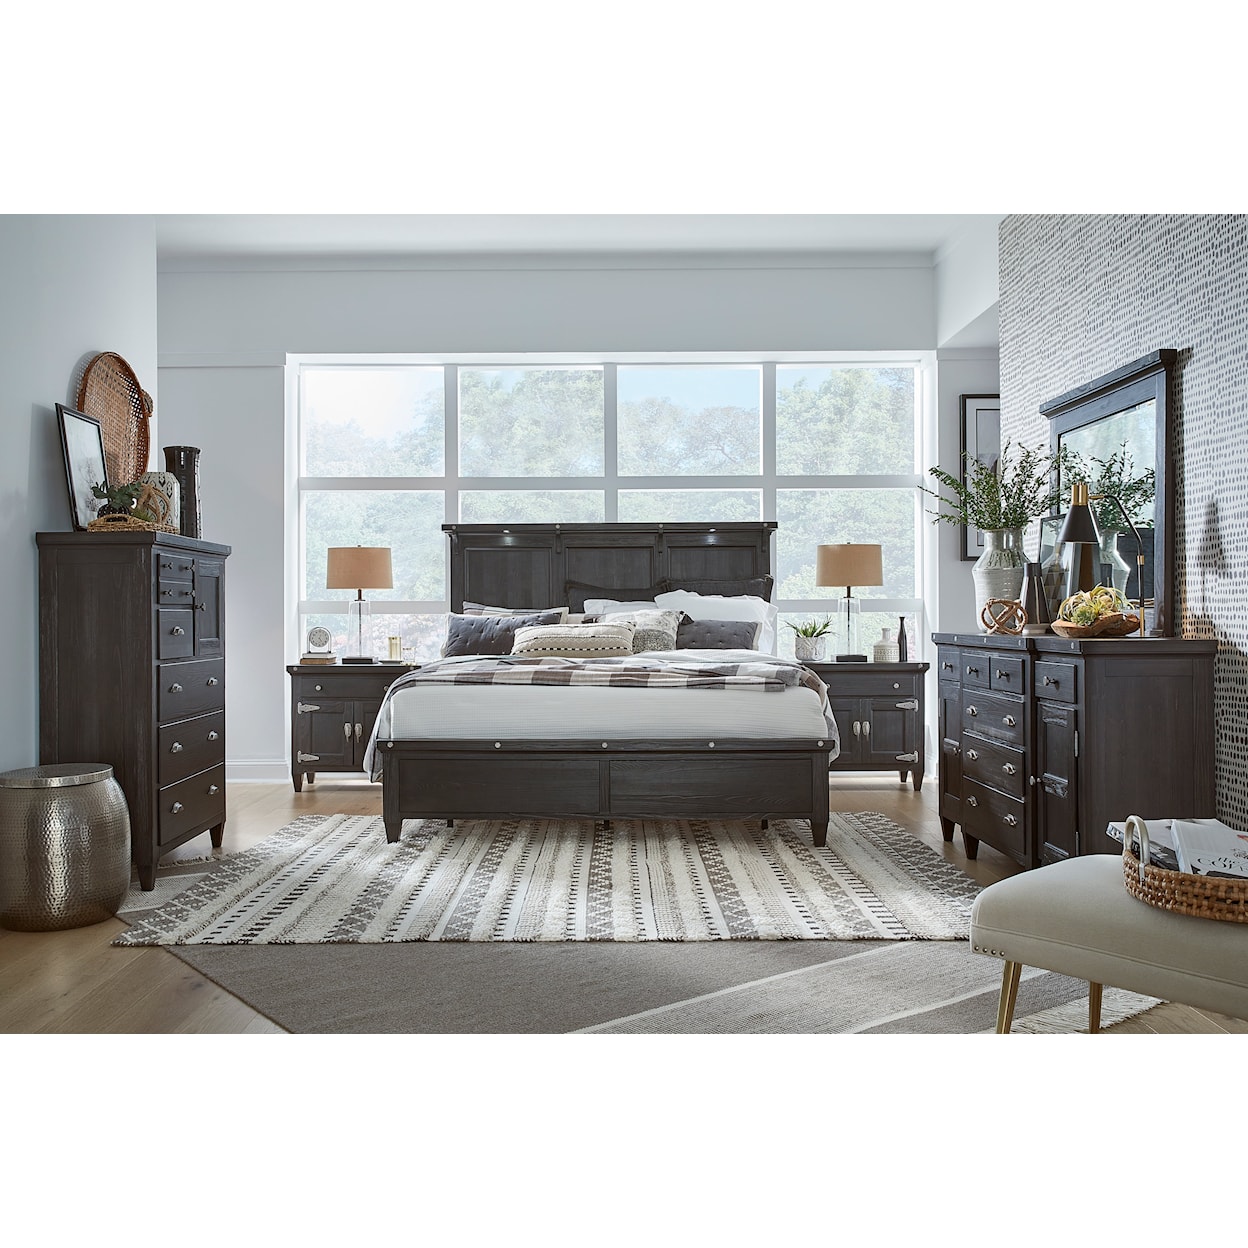 Magnussen Home Sierra Bedroom King Lighted Panel Bed